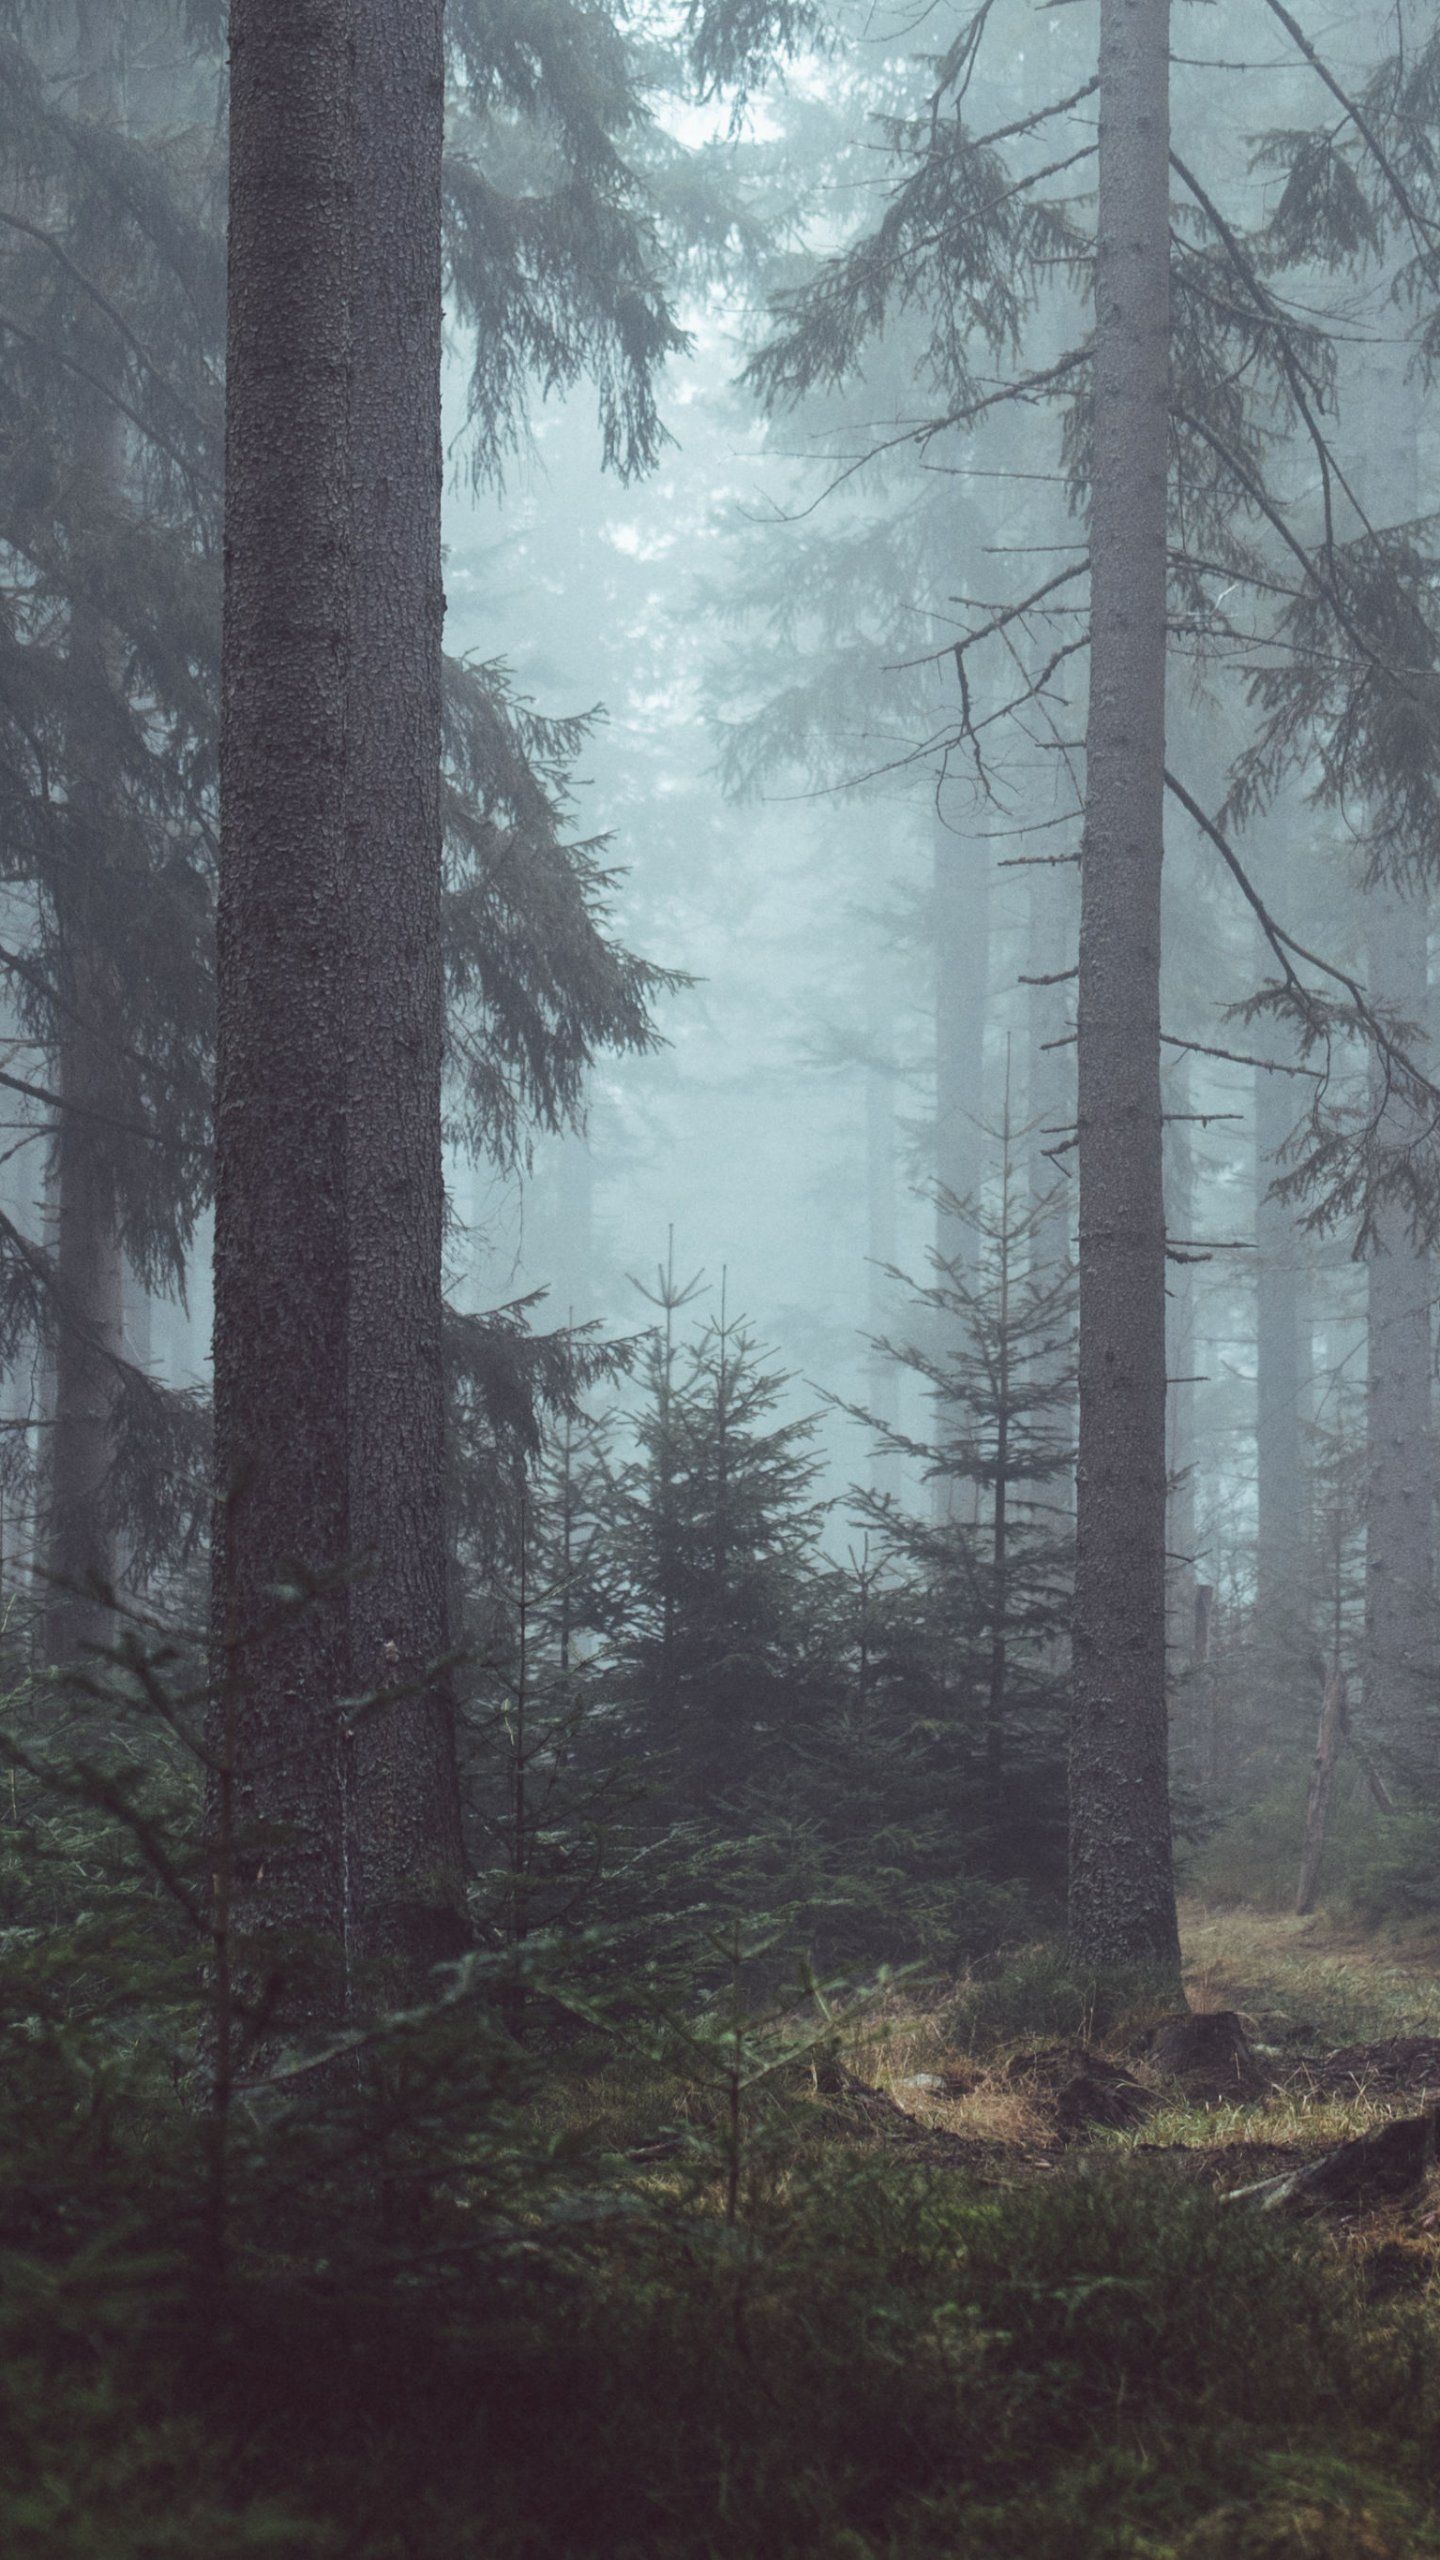 Misty Forest Wallpaper, Android & Desktop Background. Forest wallpaper iphone, Forest wallpaper, Misty forest